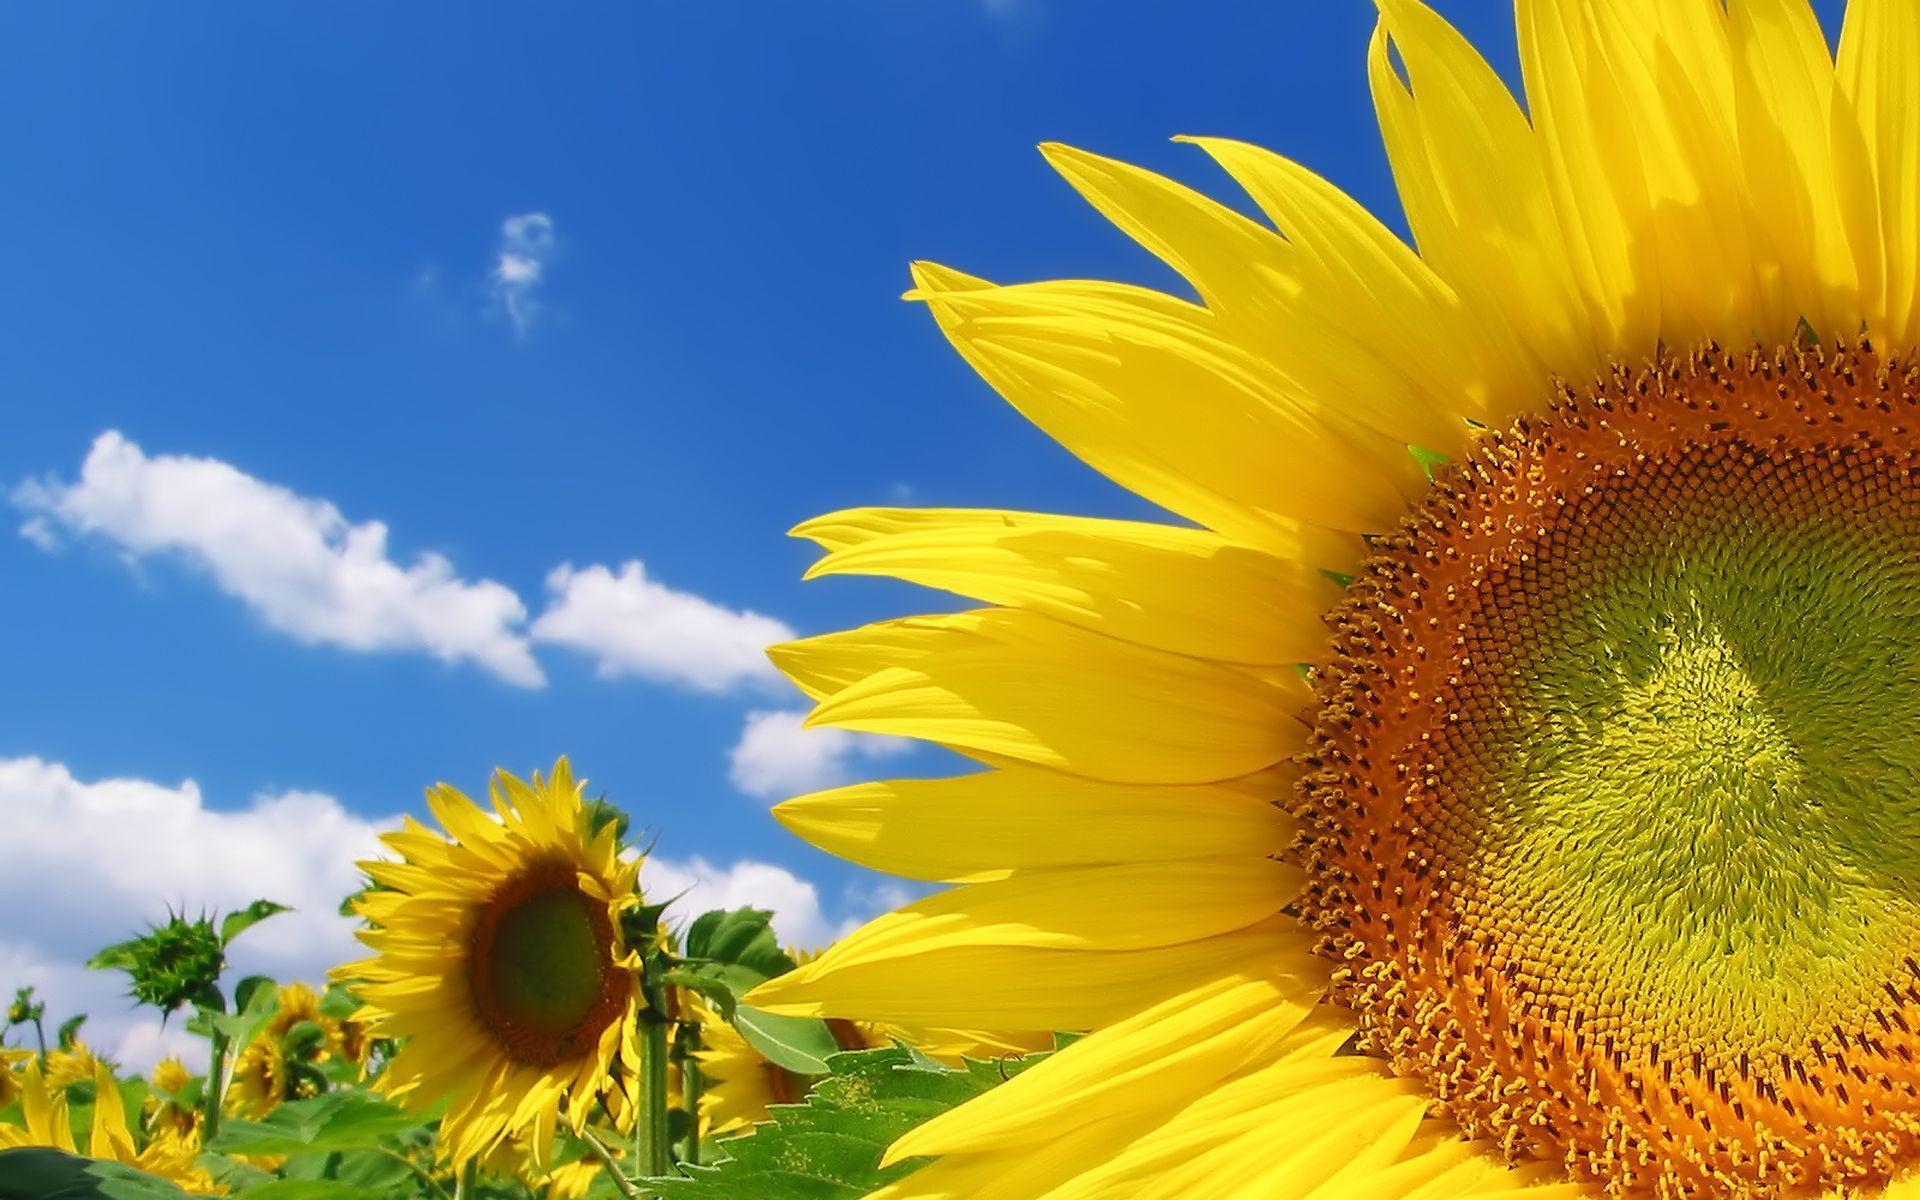 Sunny Day Flower Windows 8.1 theme. Download free windows 8 HD themes